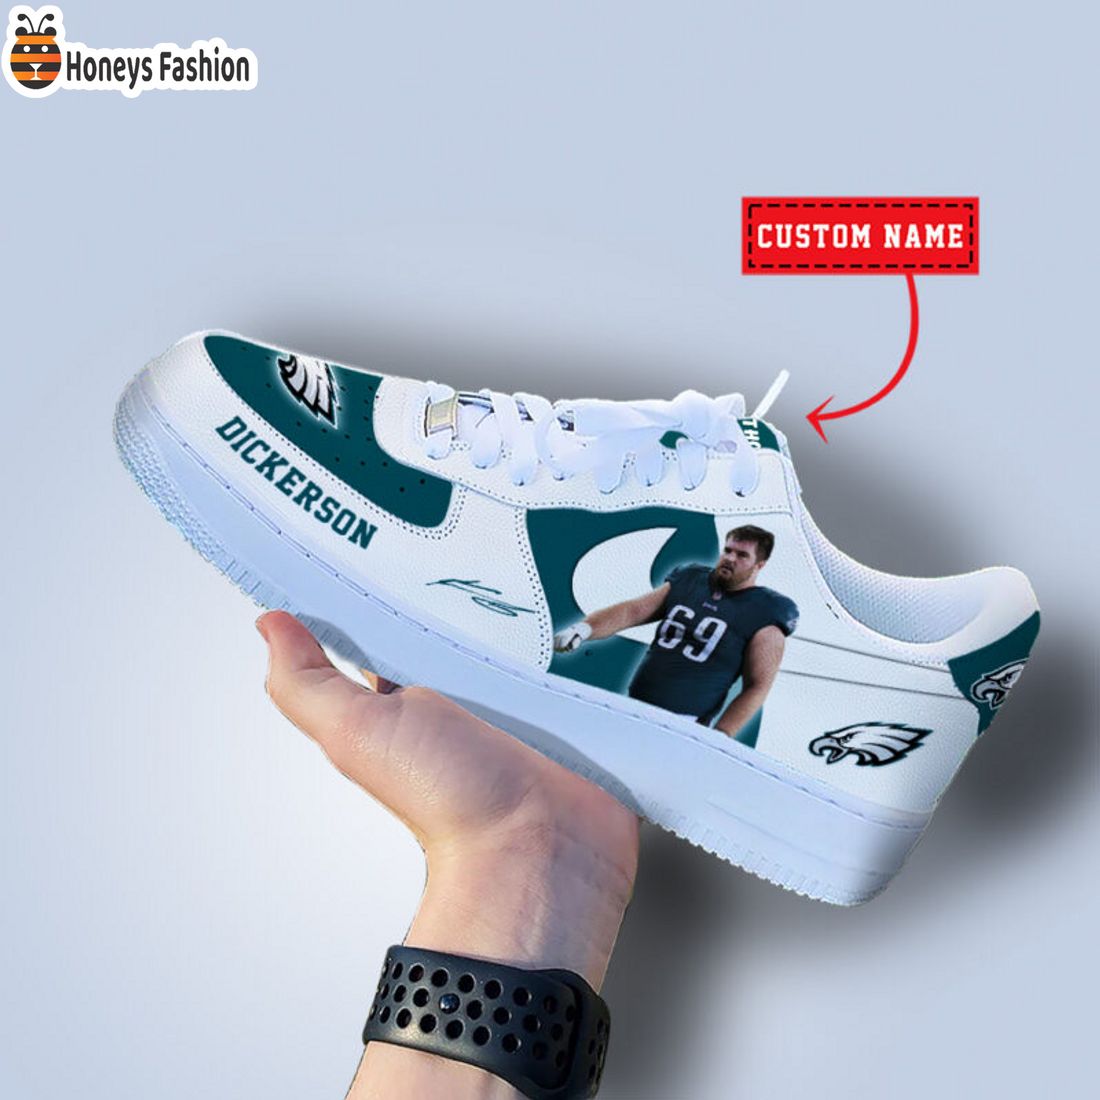 TOP SELLER Landon Dickerson Philadelphia Eagles NFL Custom Name Nike Air Force Shoes